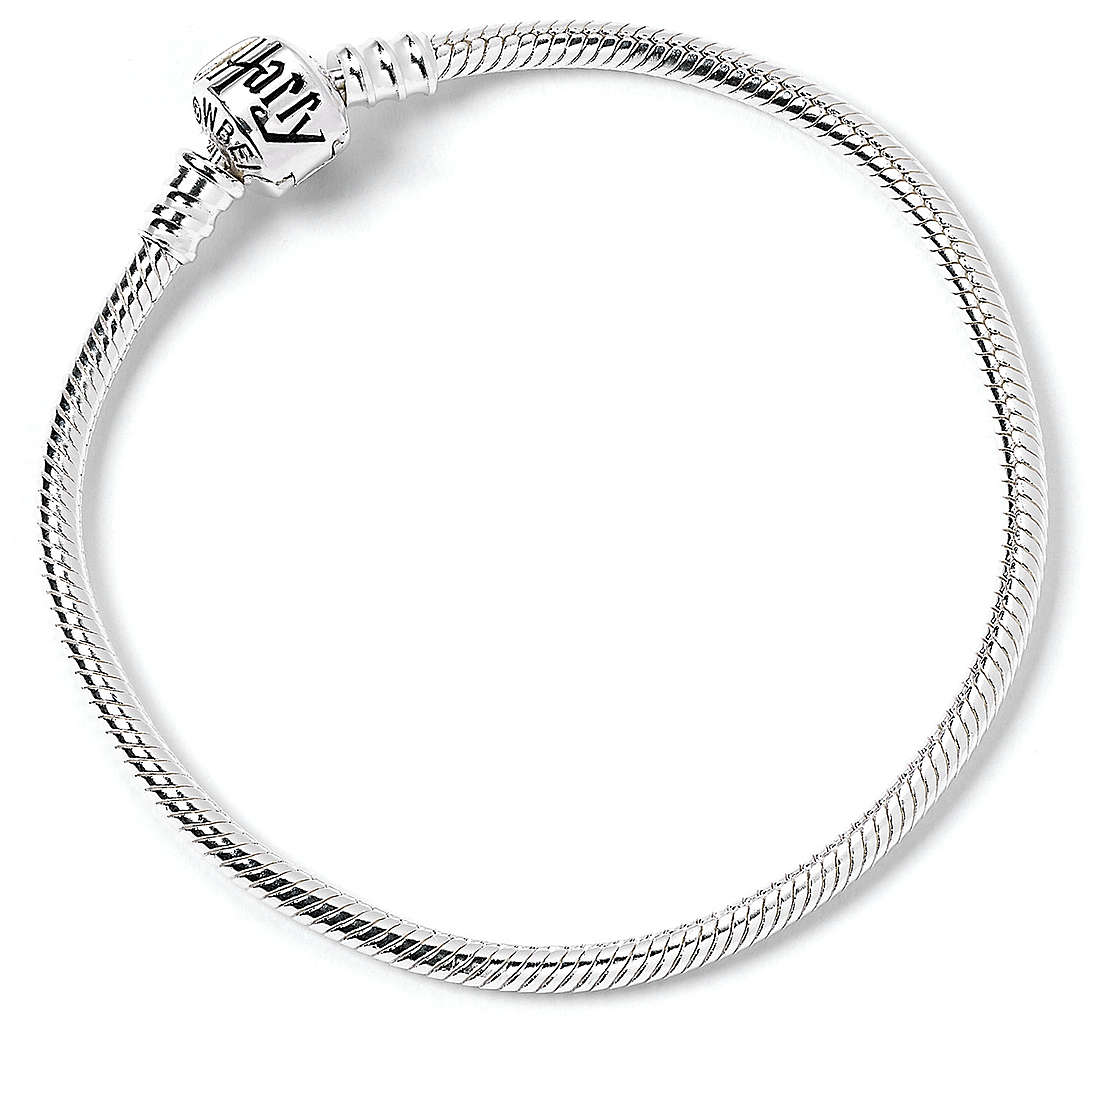 bracelet woman jewellery Harry Potter SB0044-19